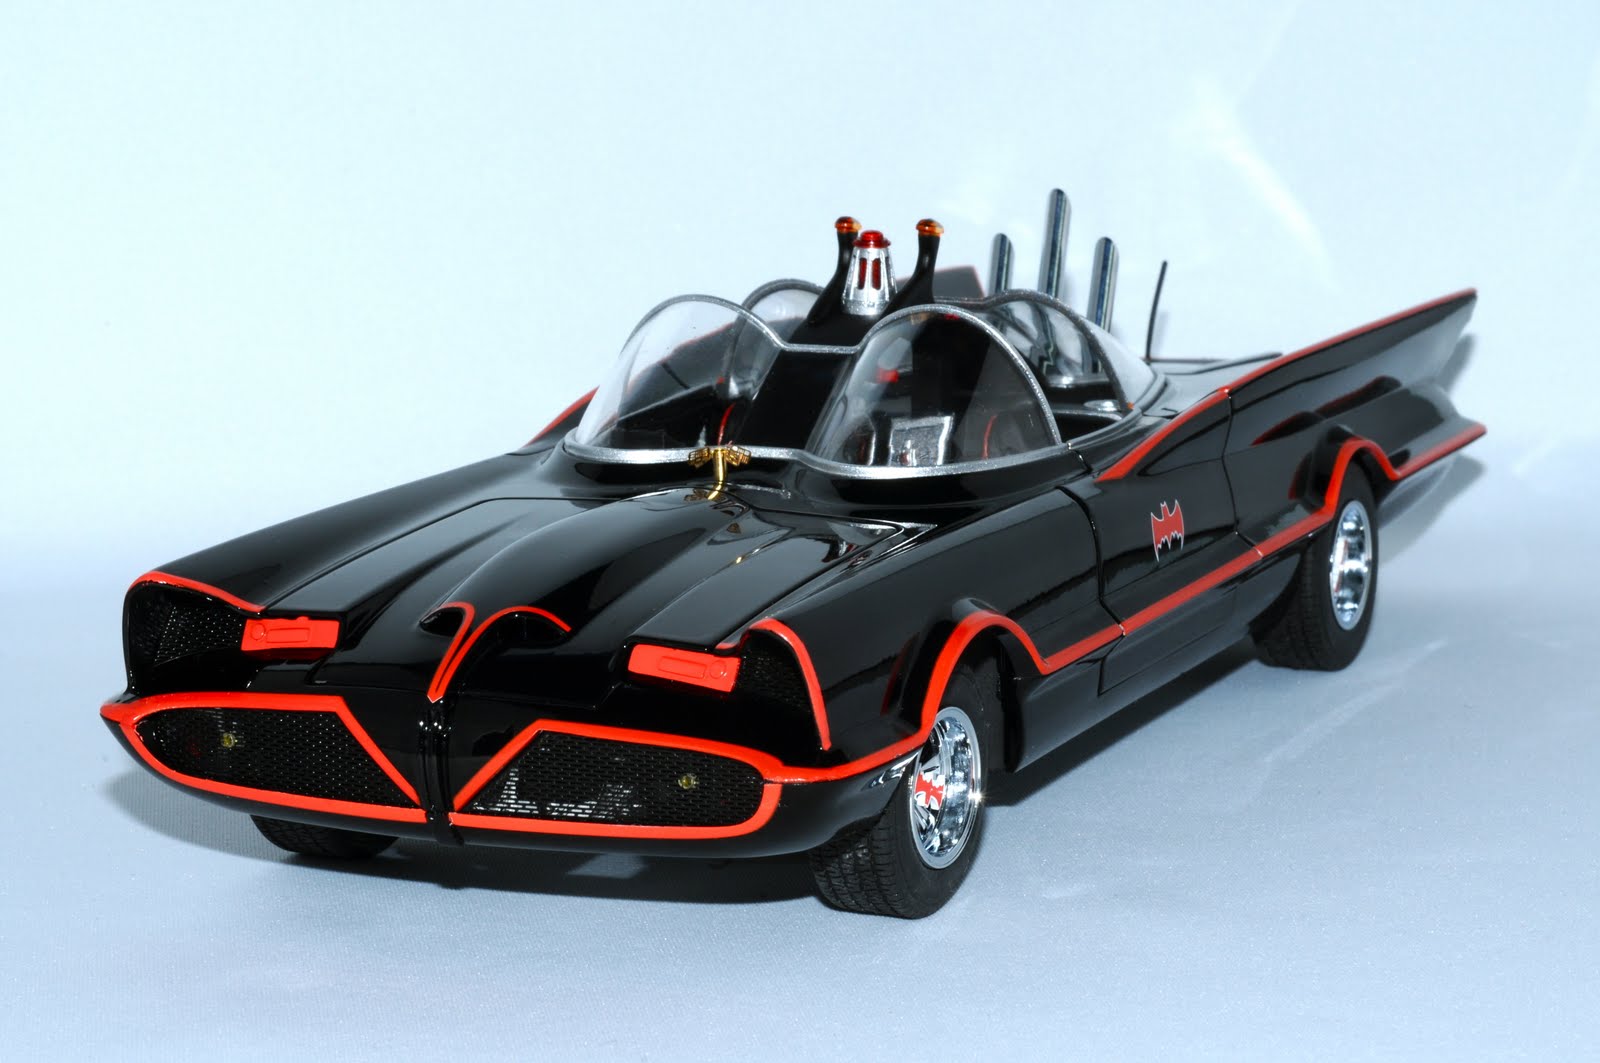 The Original Batmobile Built For Tv Show Batman Sold